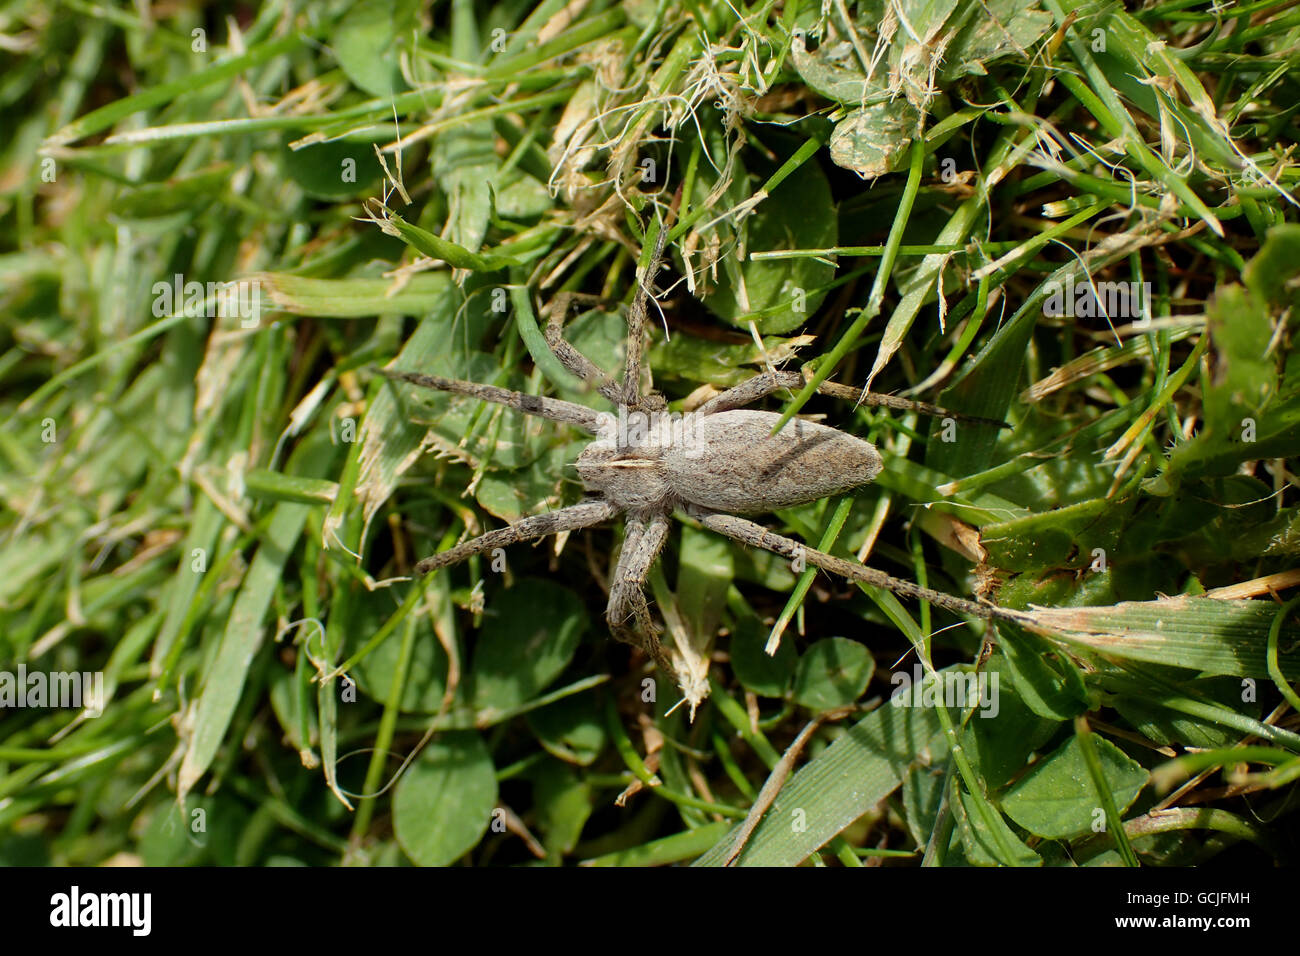 Grey nursery web spider (Pisaura mirabilis) on a recently-cut grass lawn Stock Photo